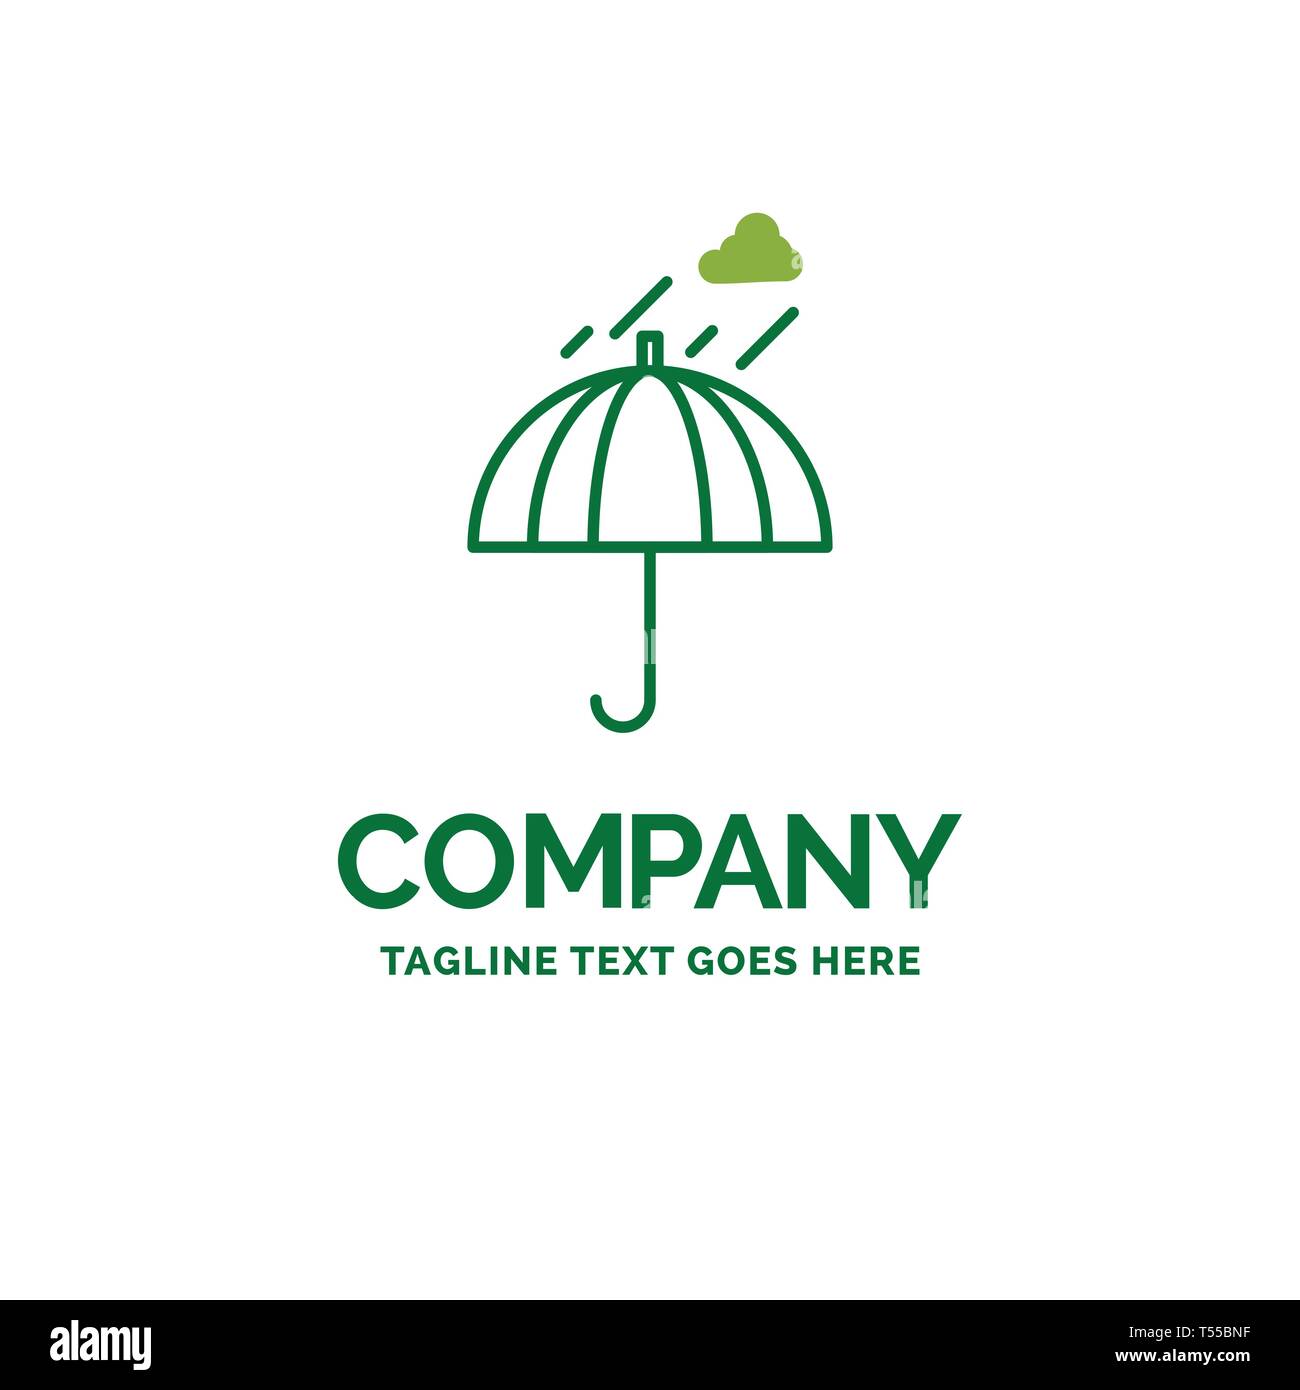 Umbrella, camping, rain, safety, weather Flat Business Logo template. Creative Green Brand Name Design. Stock Vector